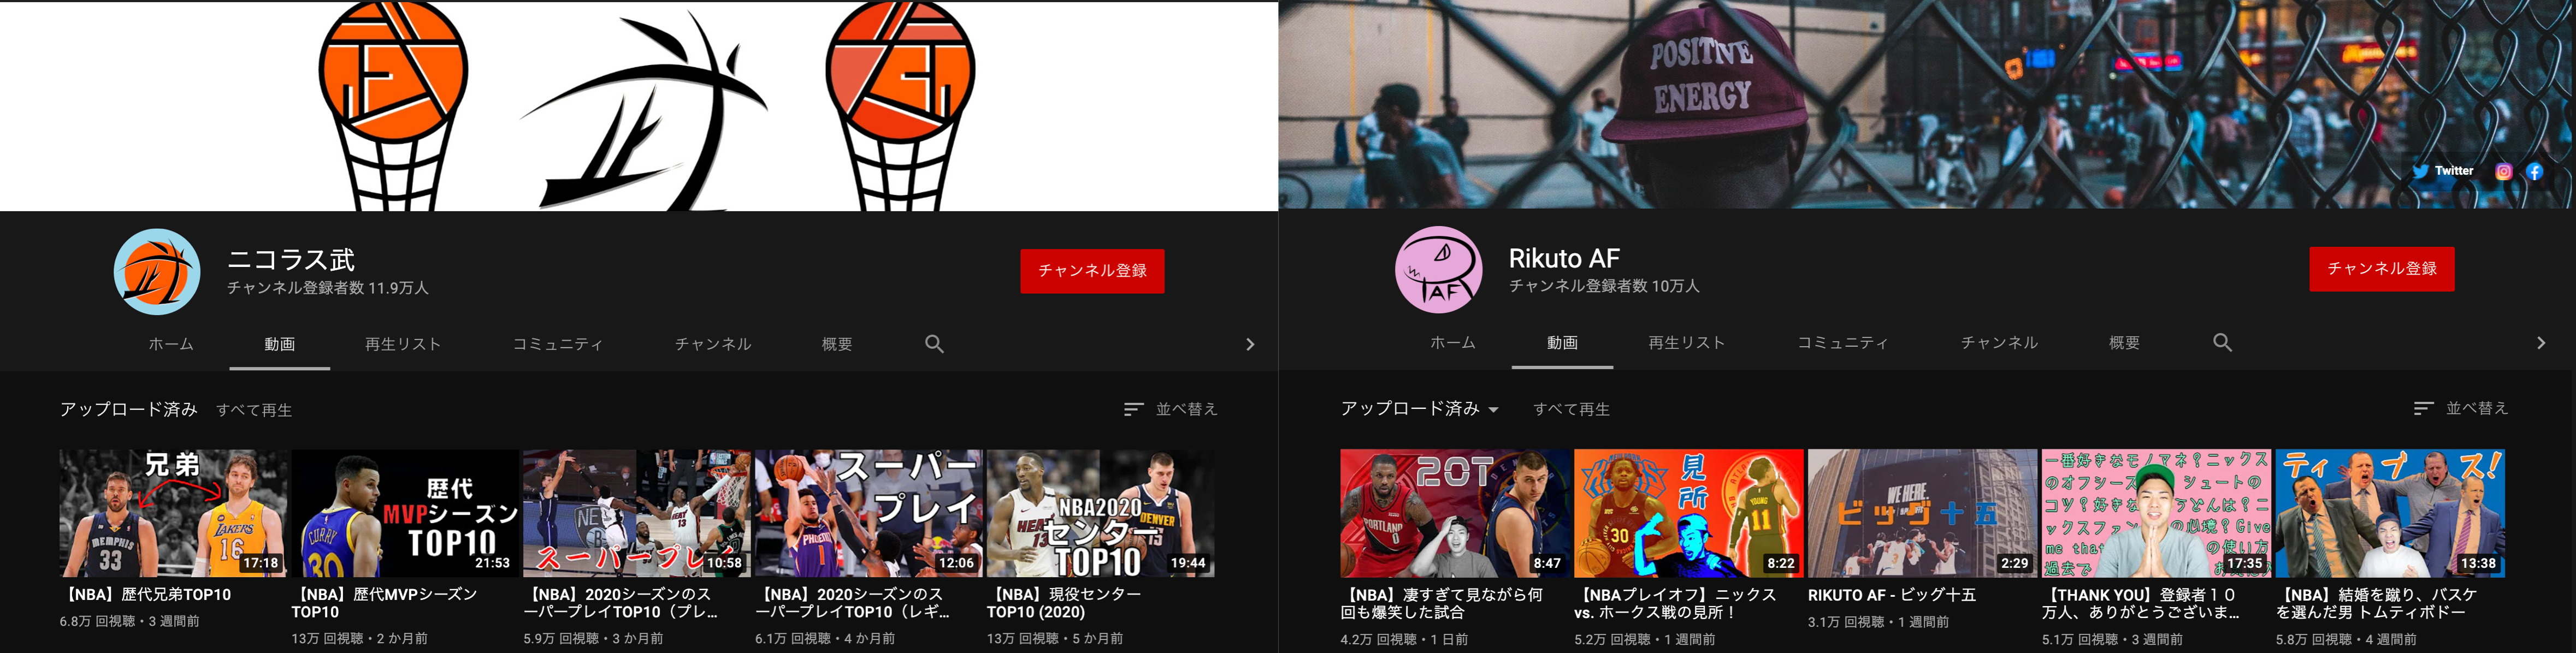 youtube_basketball_nba